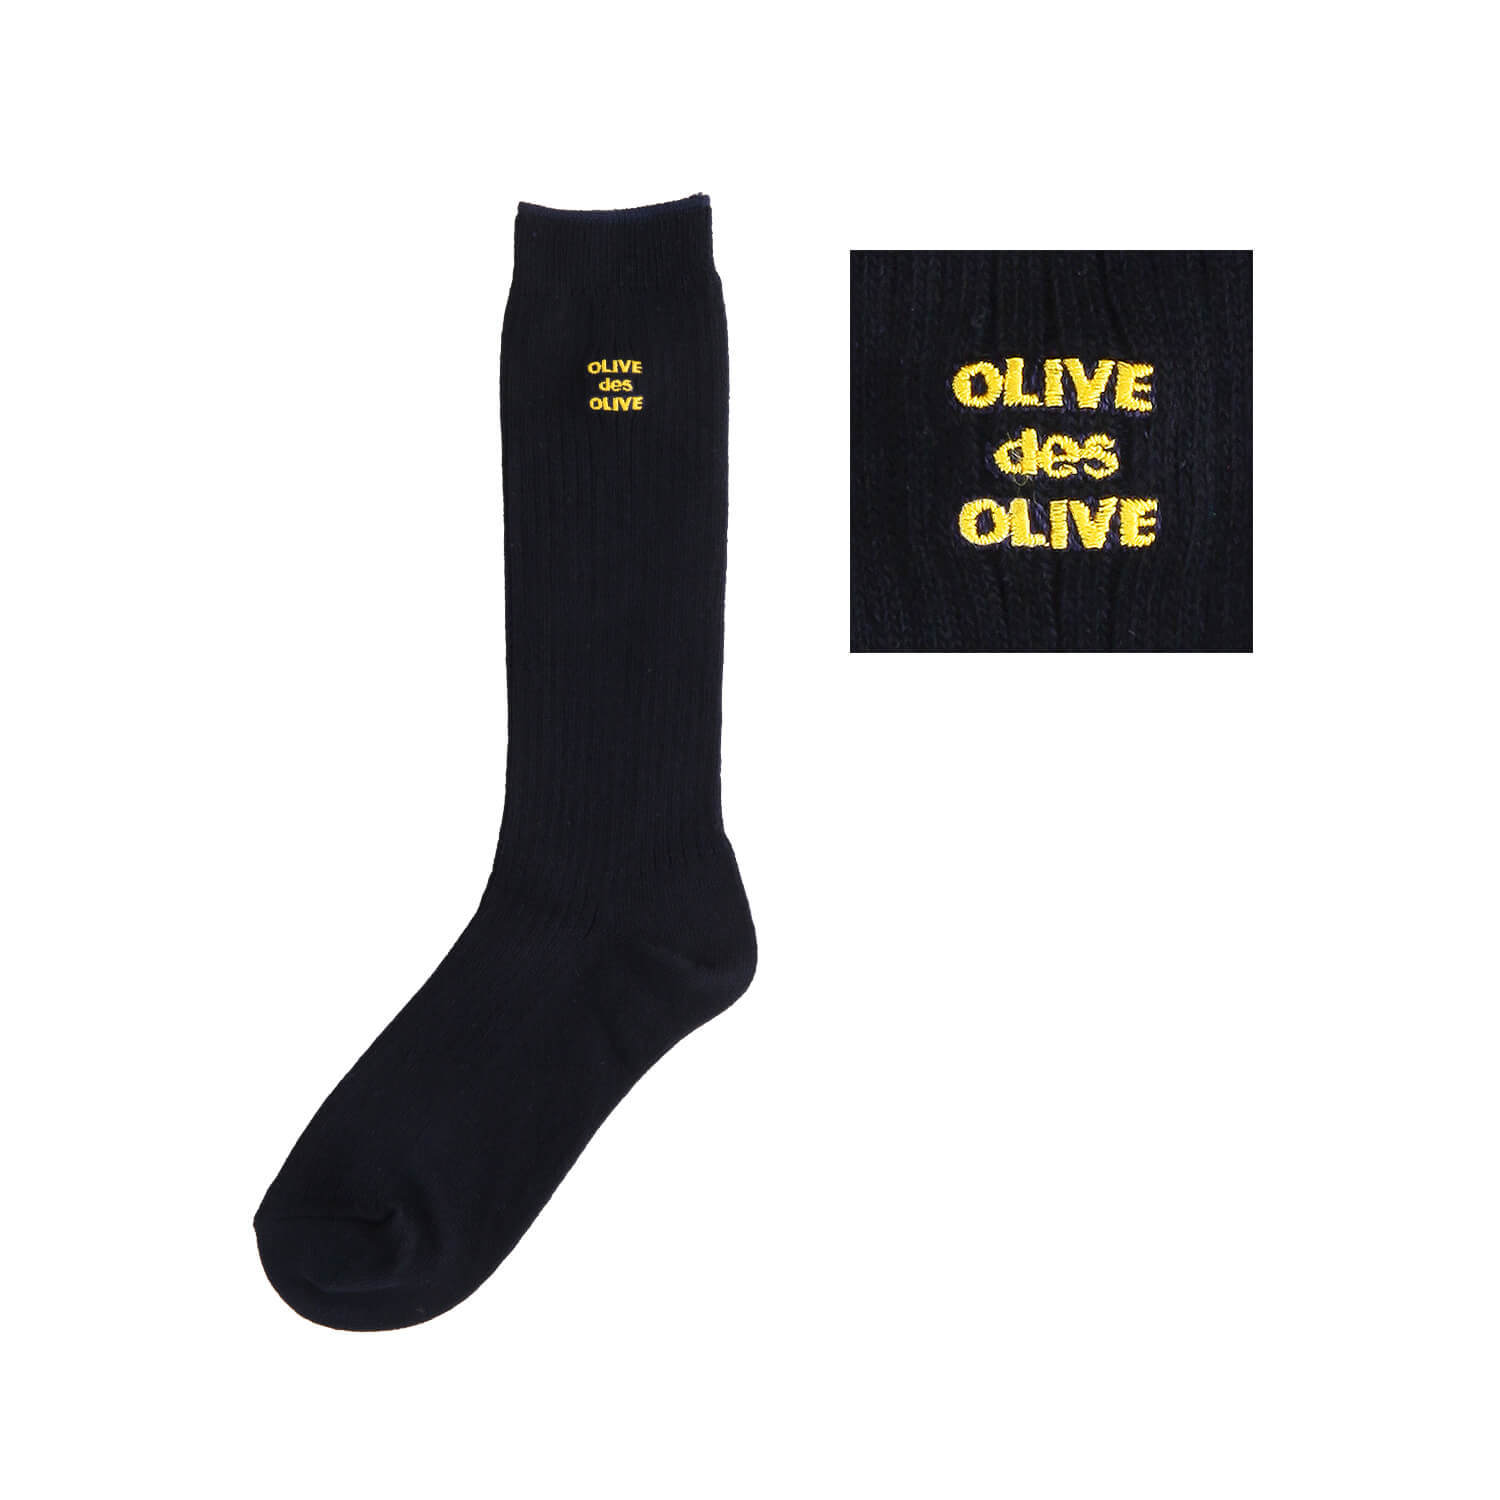 OLIVE des OLIVEのポップなロゴ刺繍入りのレギュラーソックス。刺繍カラー-35黄